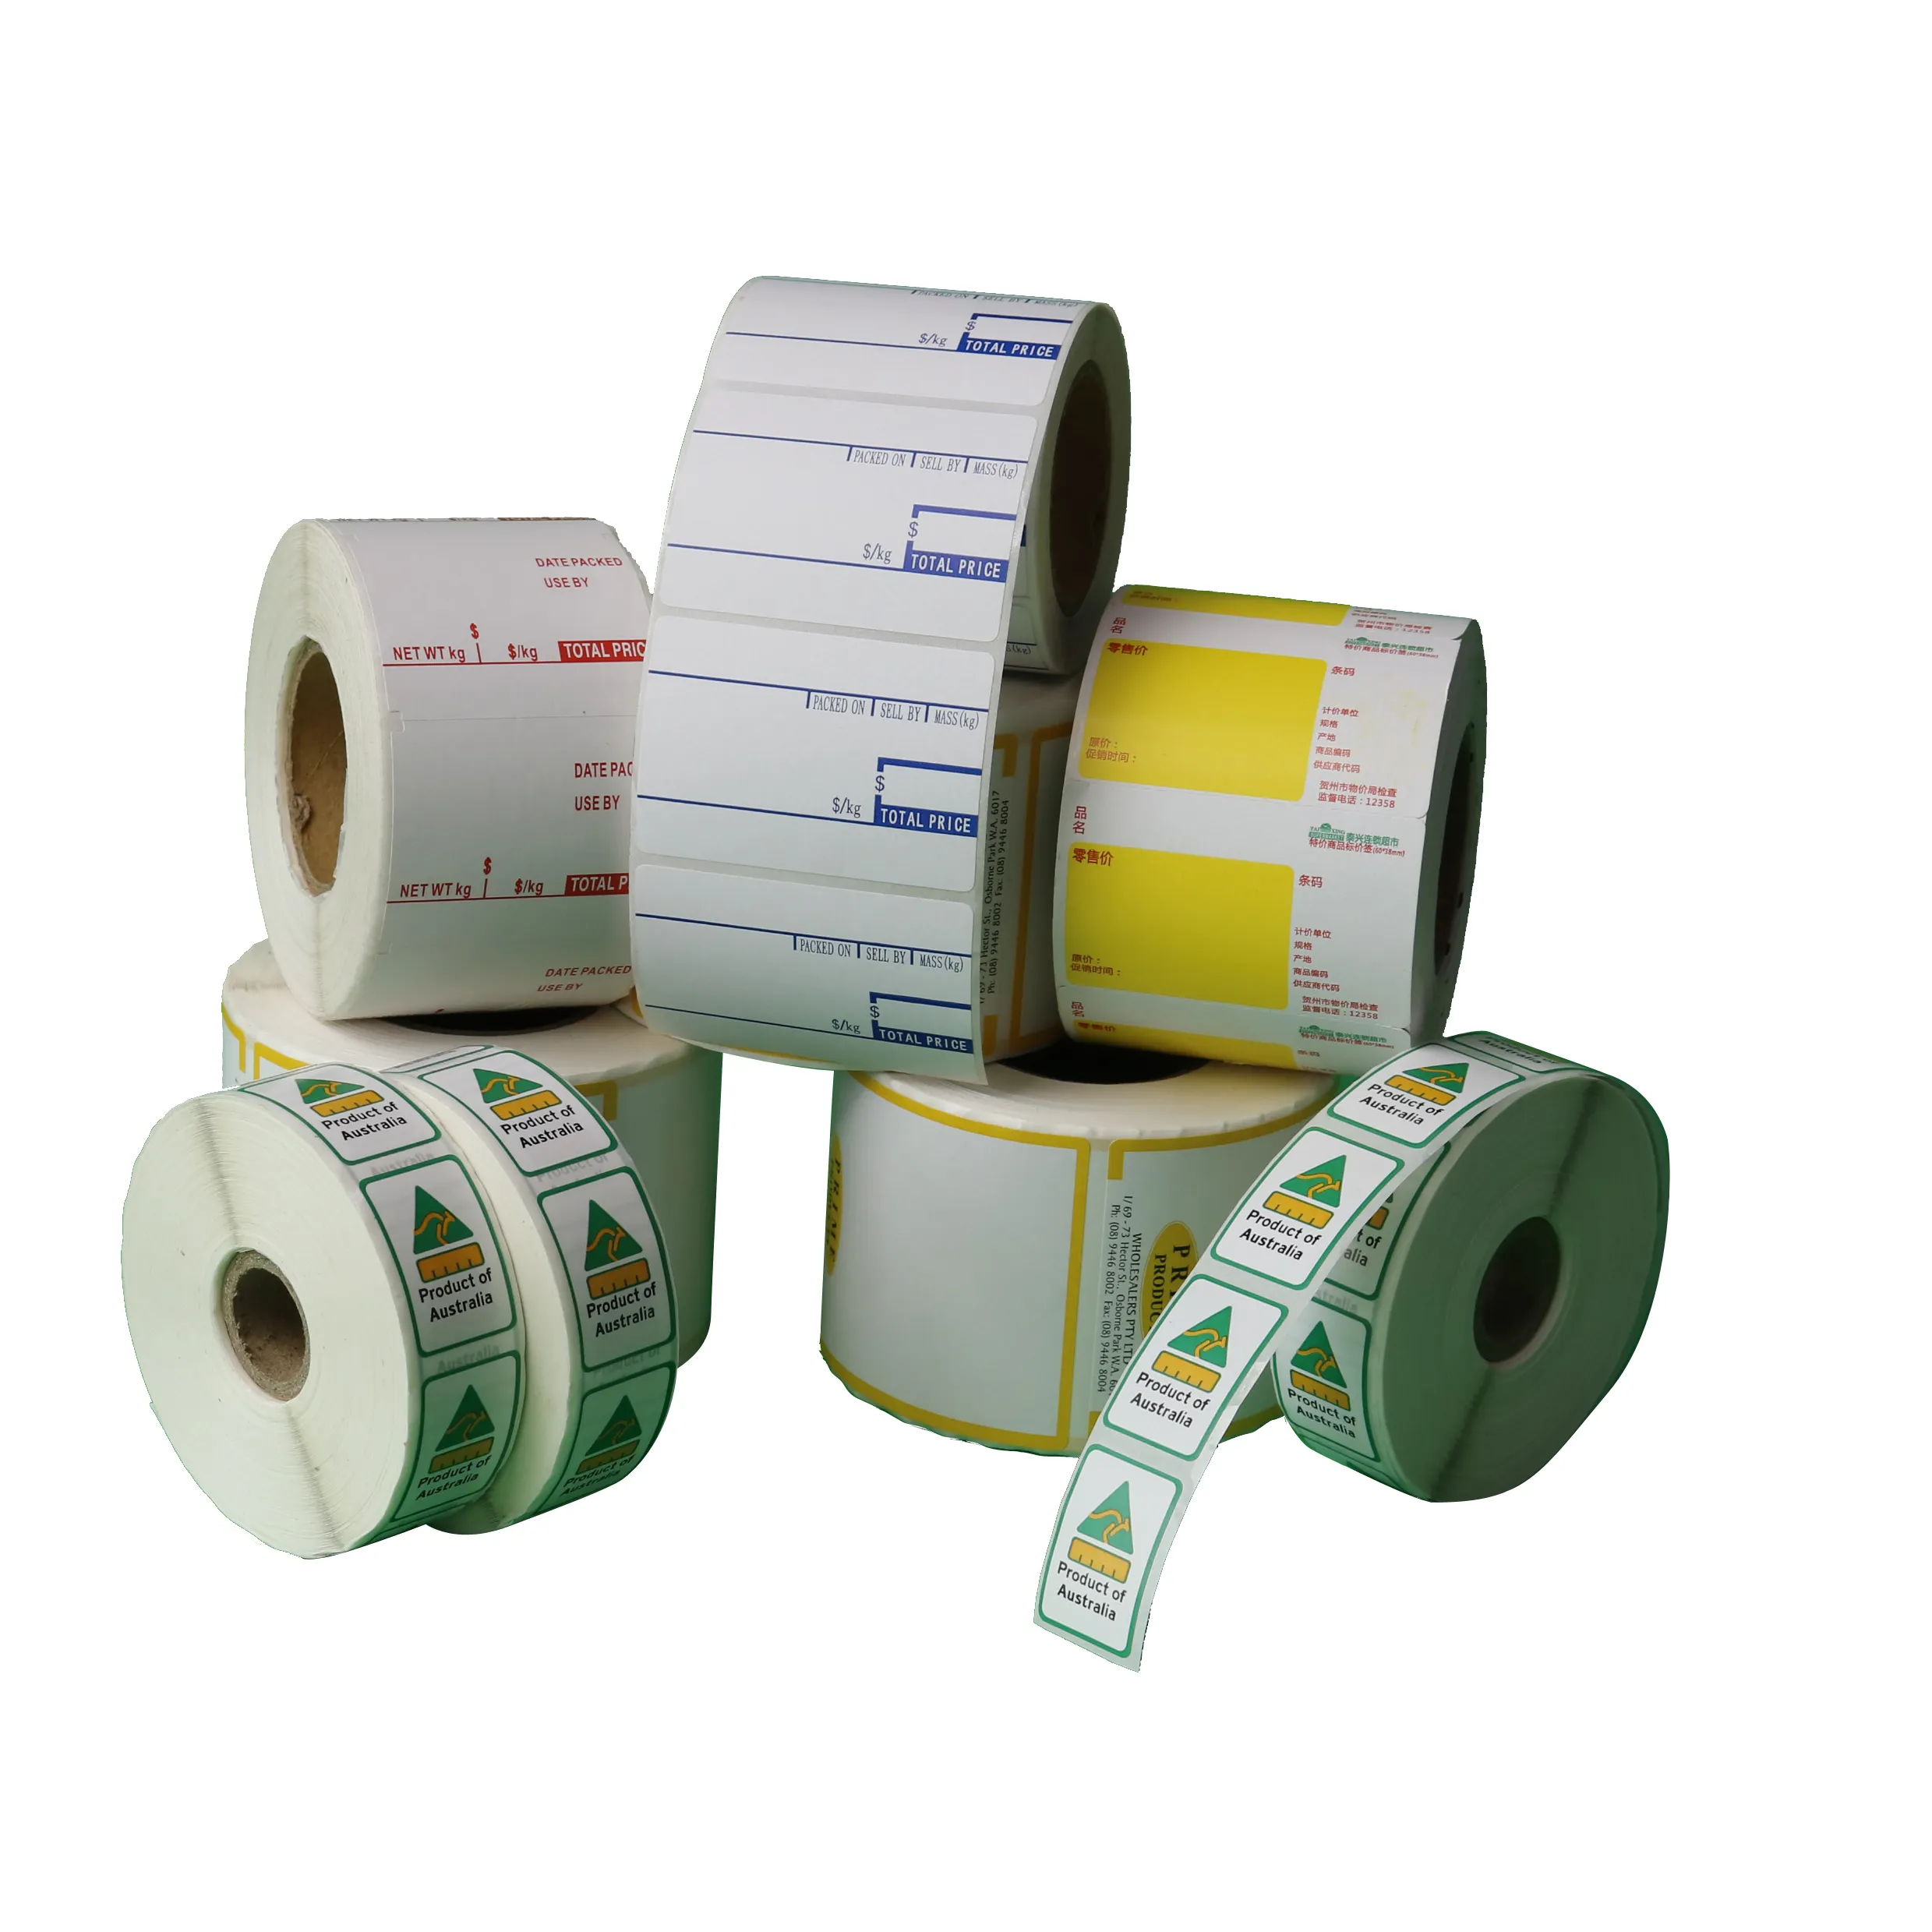 Pegamento acrílico resistente al calor, etiqueta adhesiva térmica personalizada, cinta de etiquetas de 100x150mm, Material PP de impresora de Tze-s751